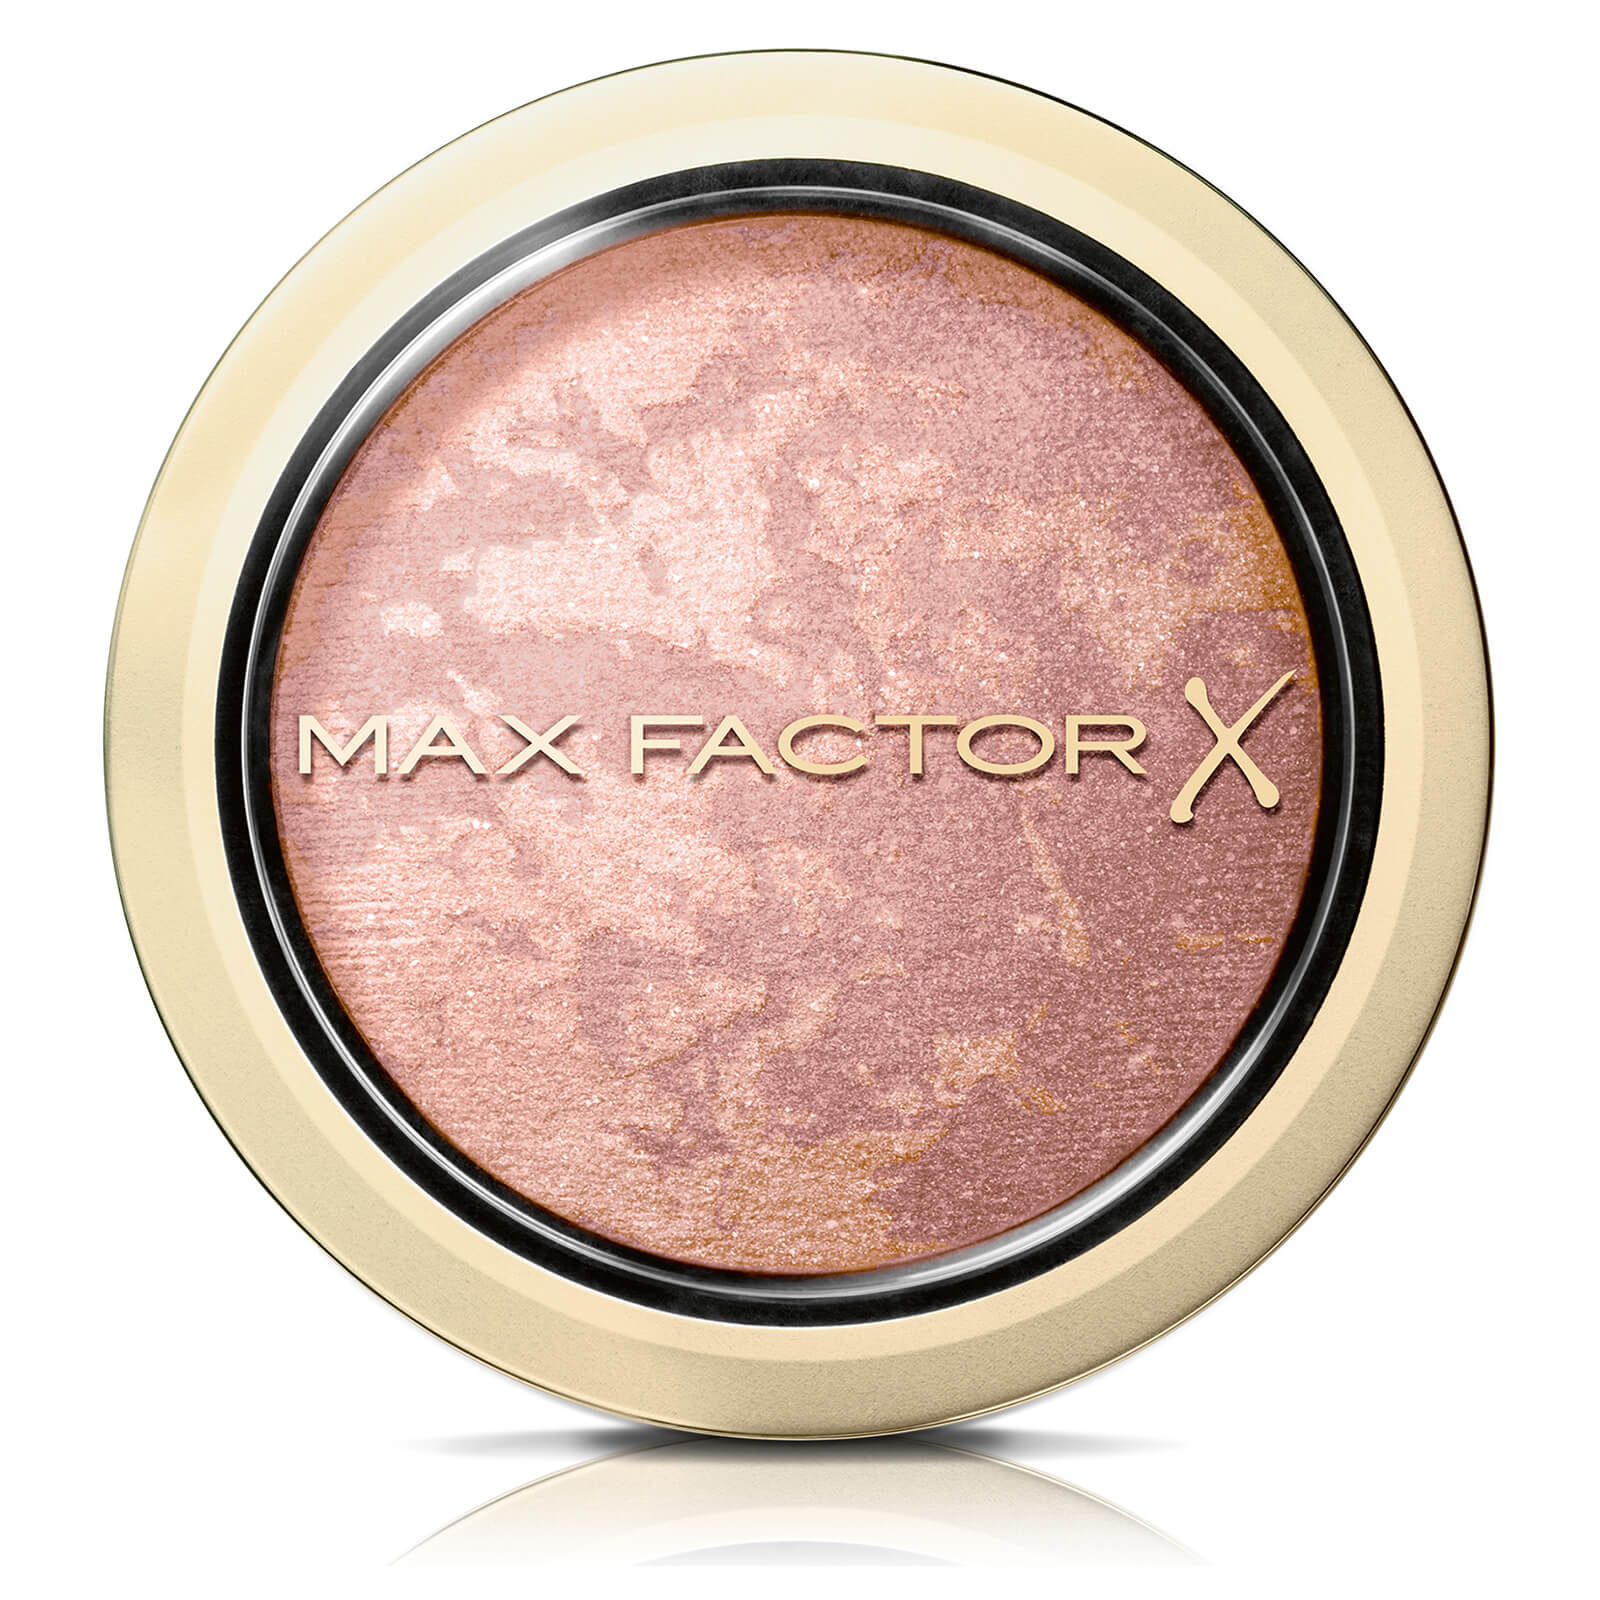 Image of Max Factor Crème Puff blush - Alluring Rose